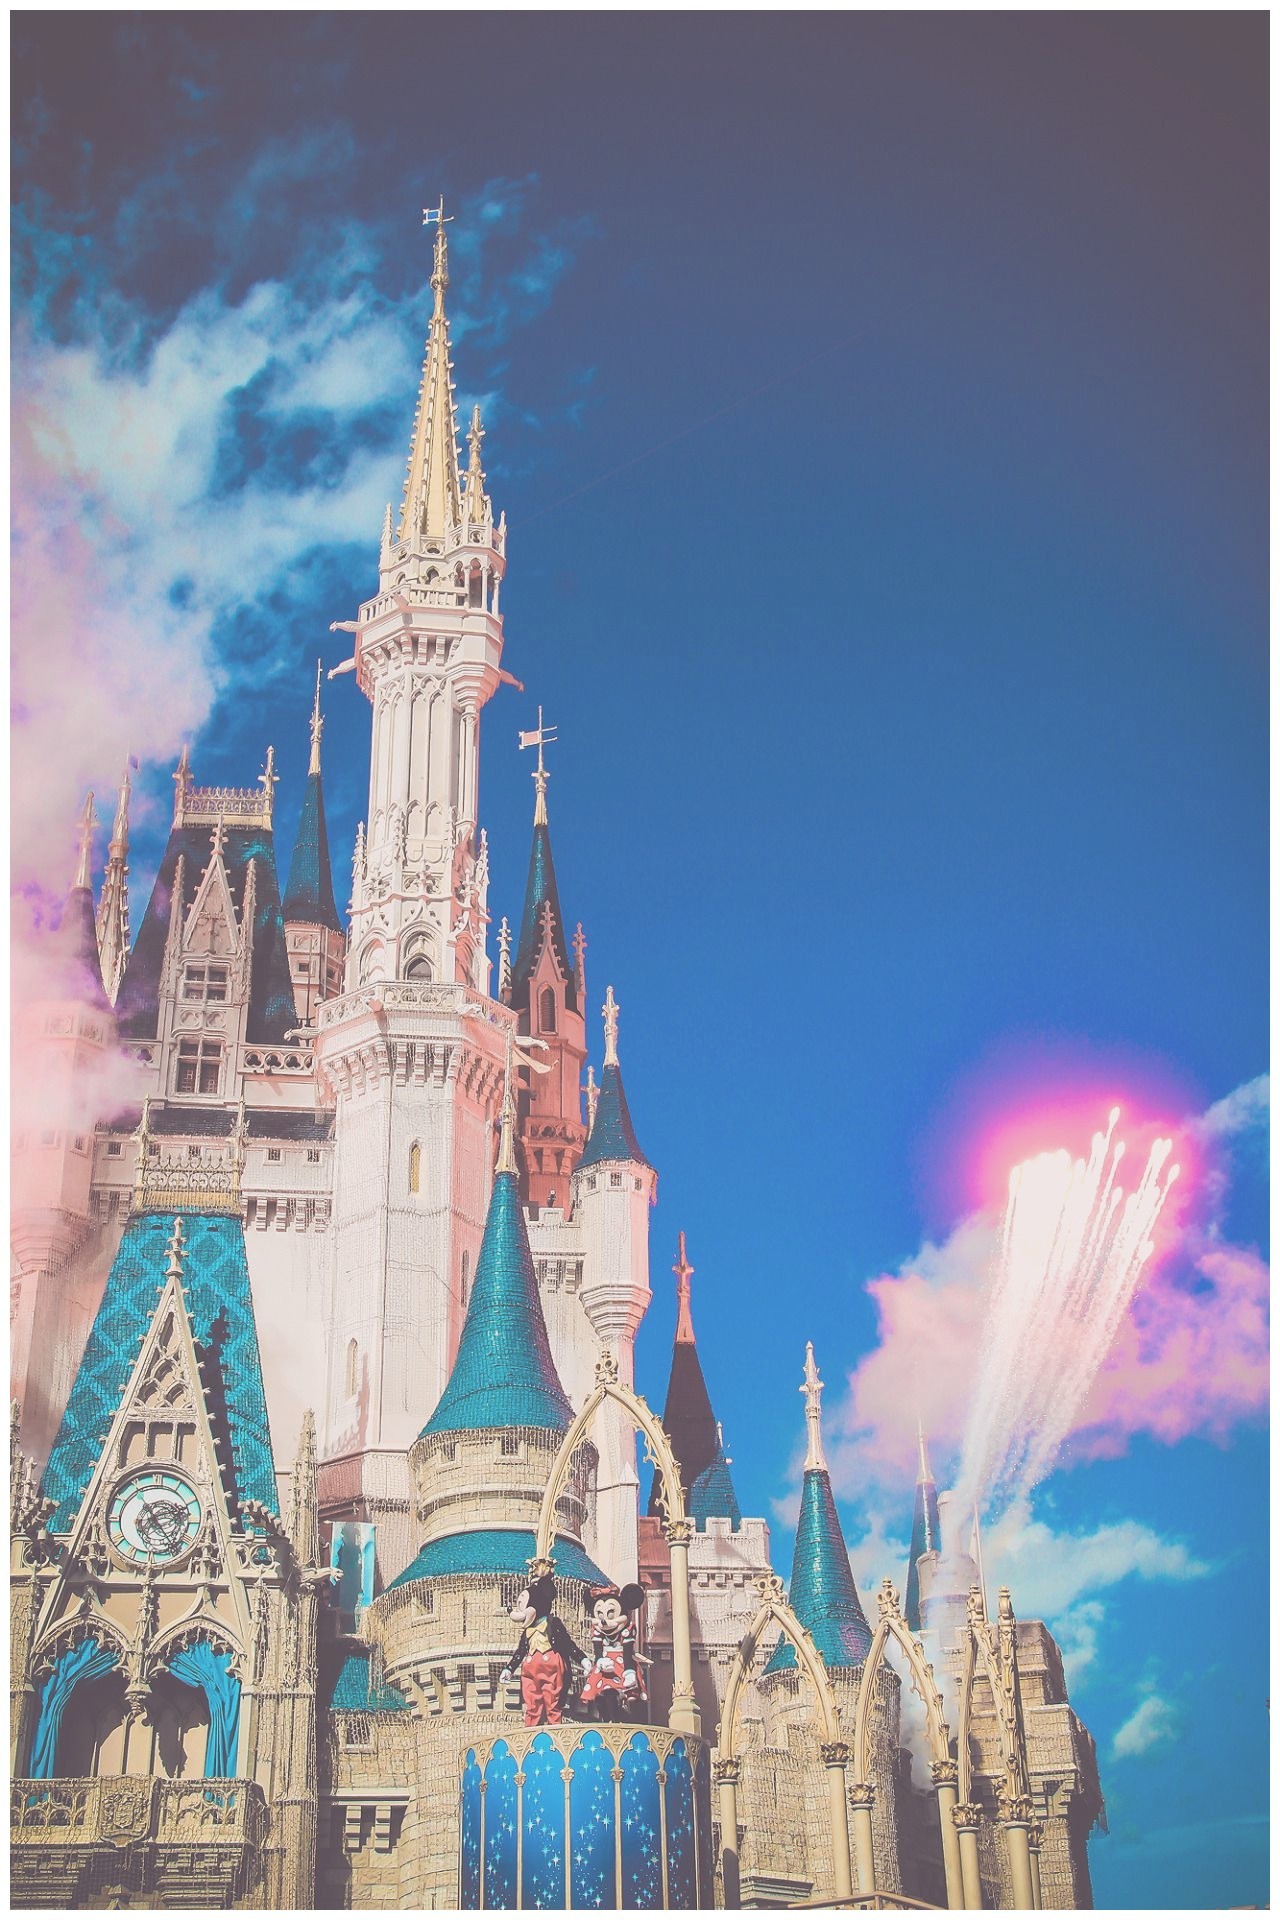 1280x1920 Disney World Castle iPhone Wallpaper